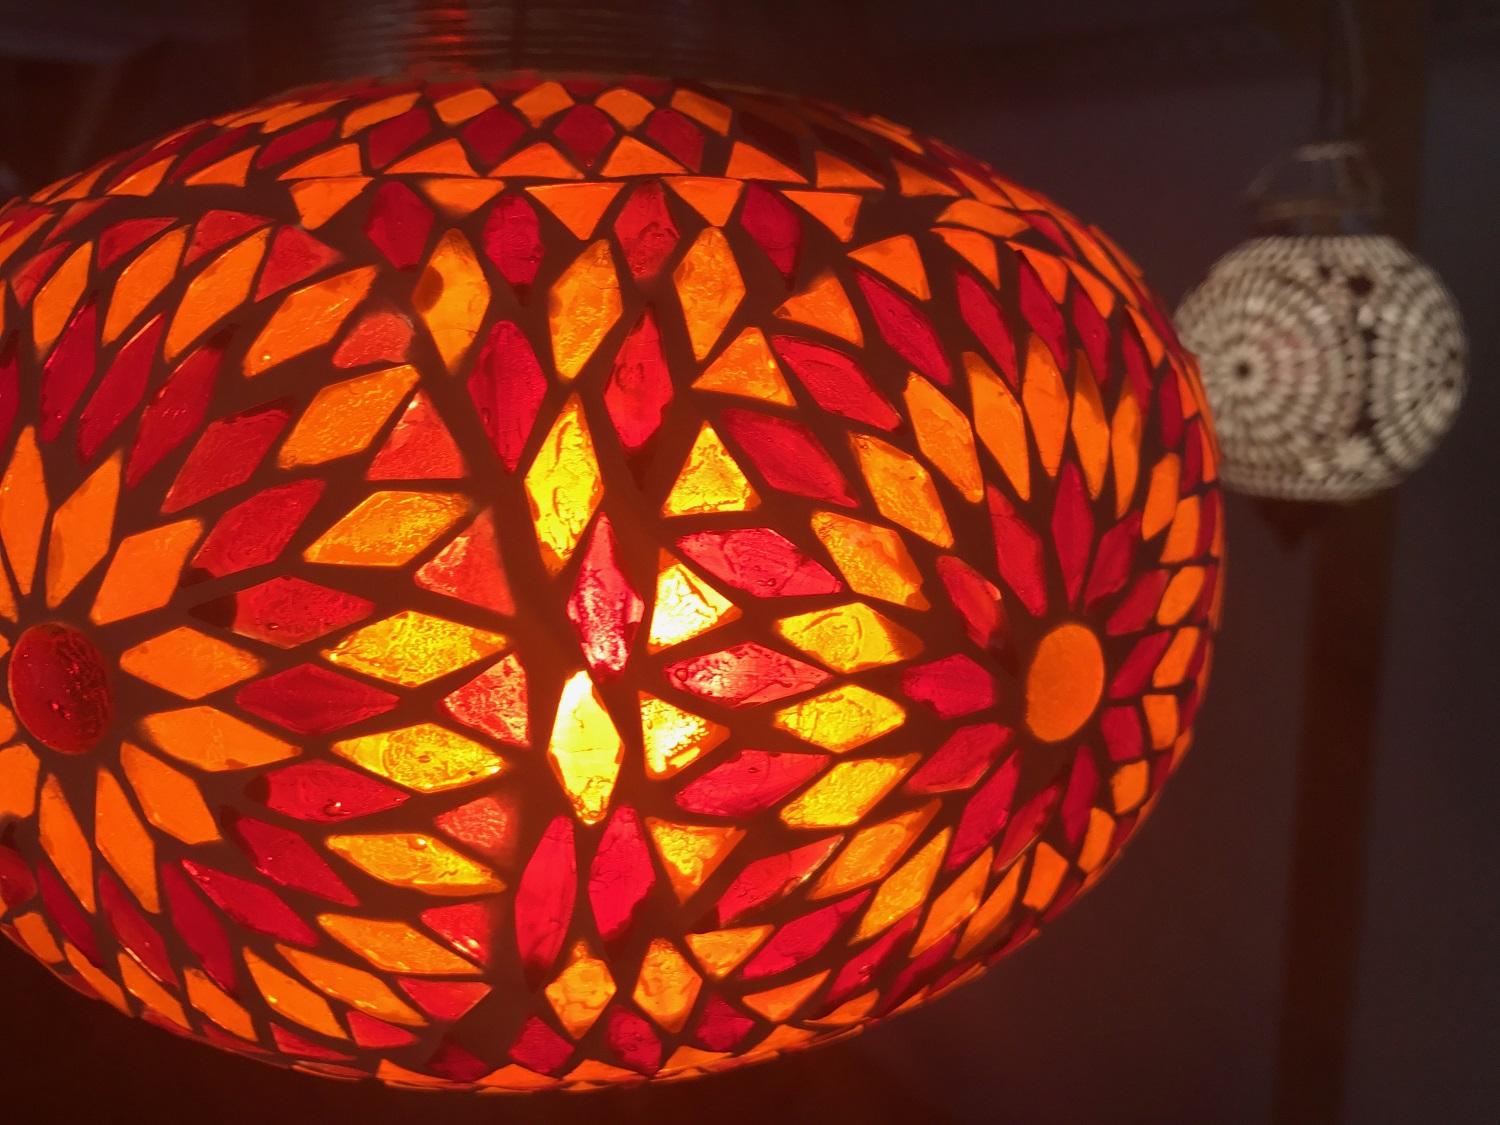 Lampe, Hängelampe, Mosaik-Hängelampe #beleuchtung #lampe #orientalisch #schlafzimmerbeleuchtung ©Kamalla-Home